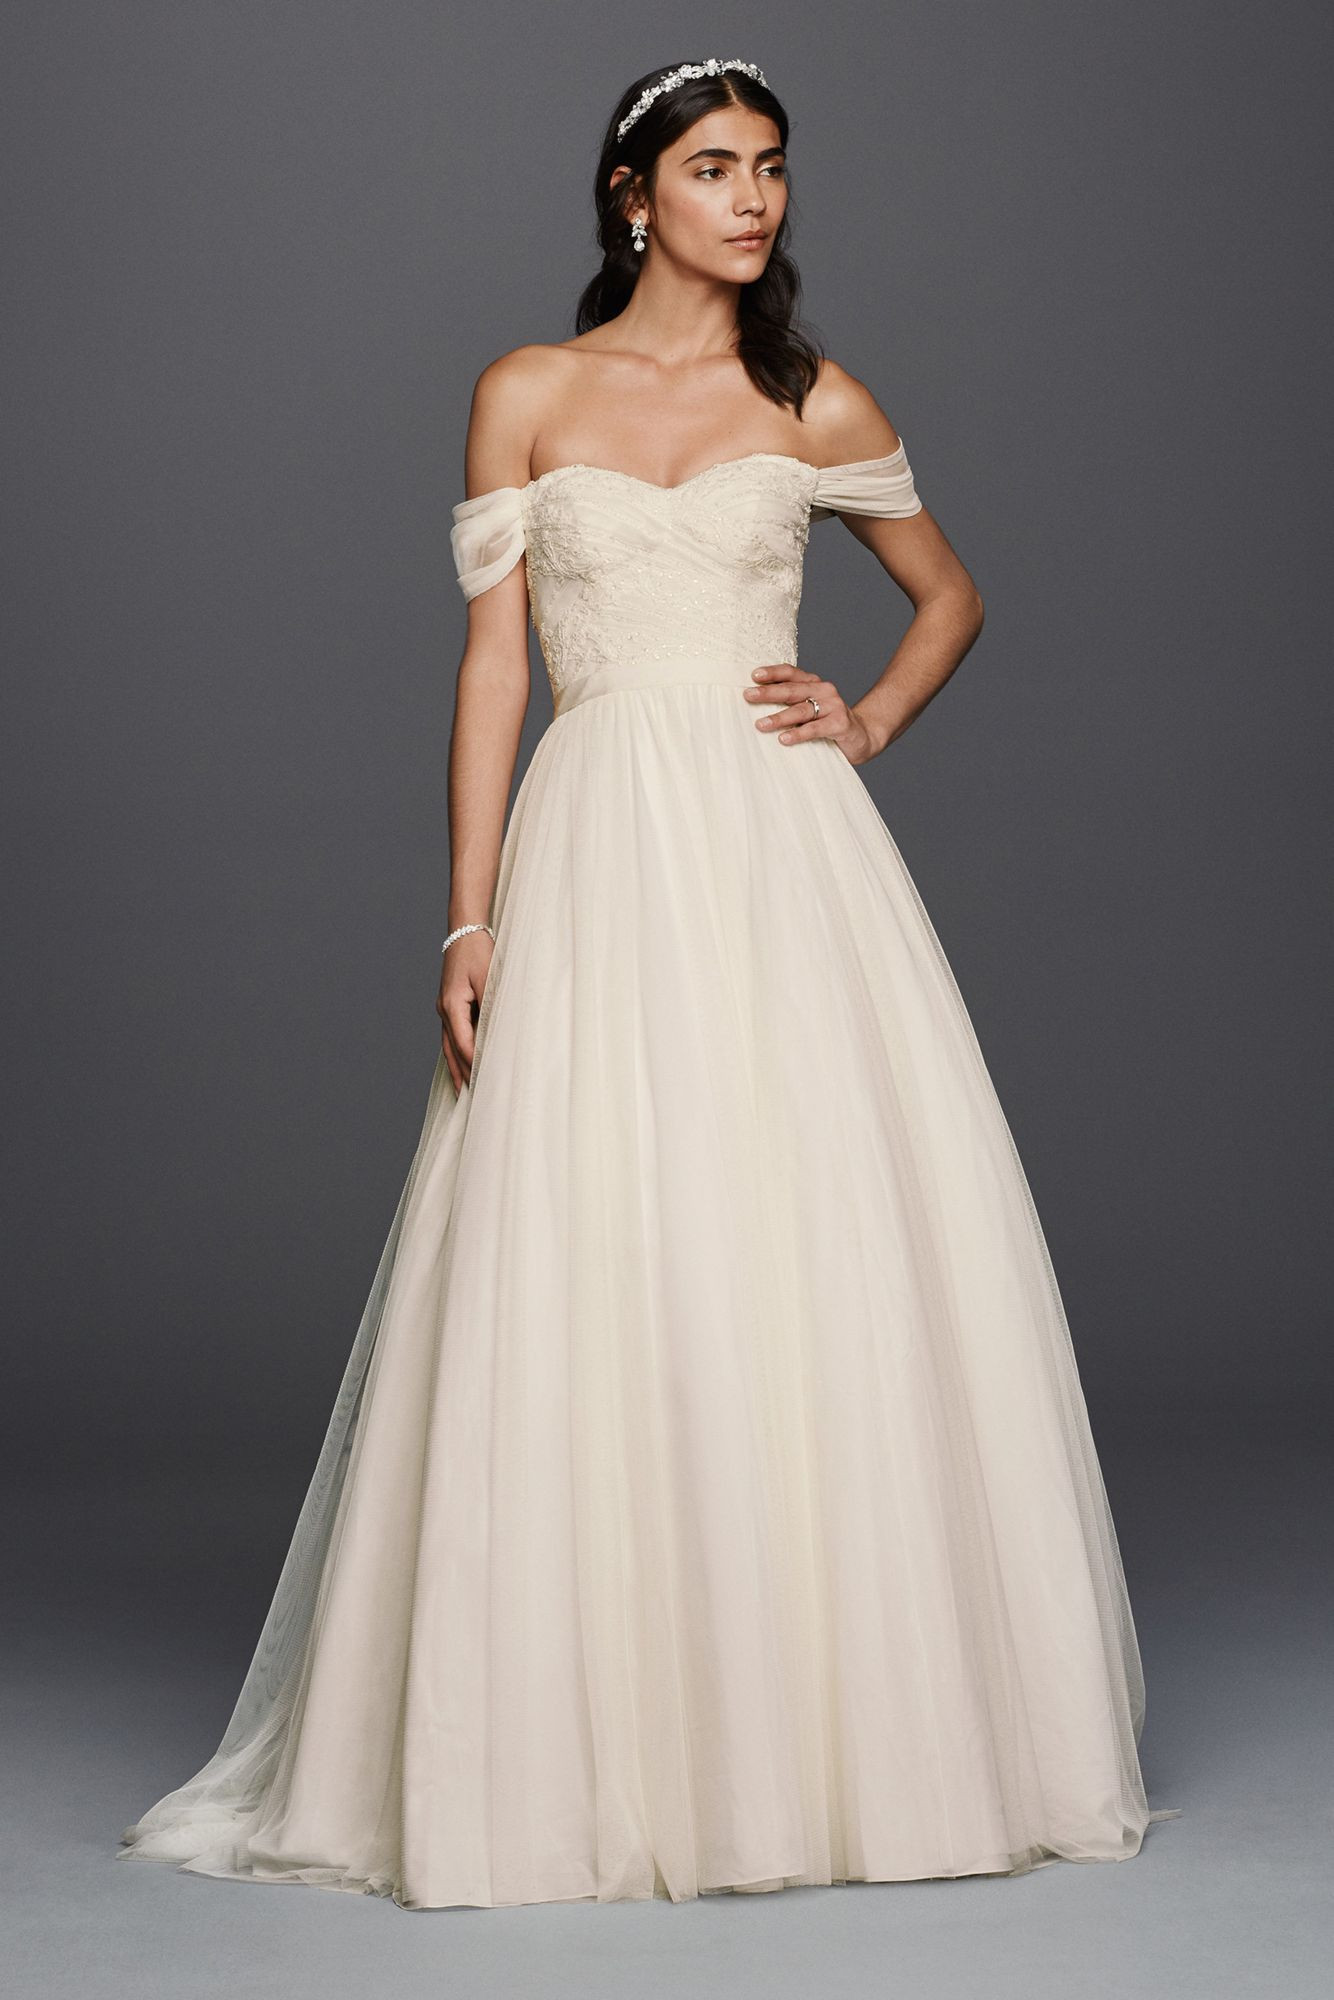 Lace Sweetheart Wedding Dress
 Tulle Beaded Lace Sweetheart Wedding Dress Style WG3785